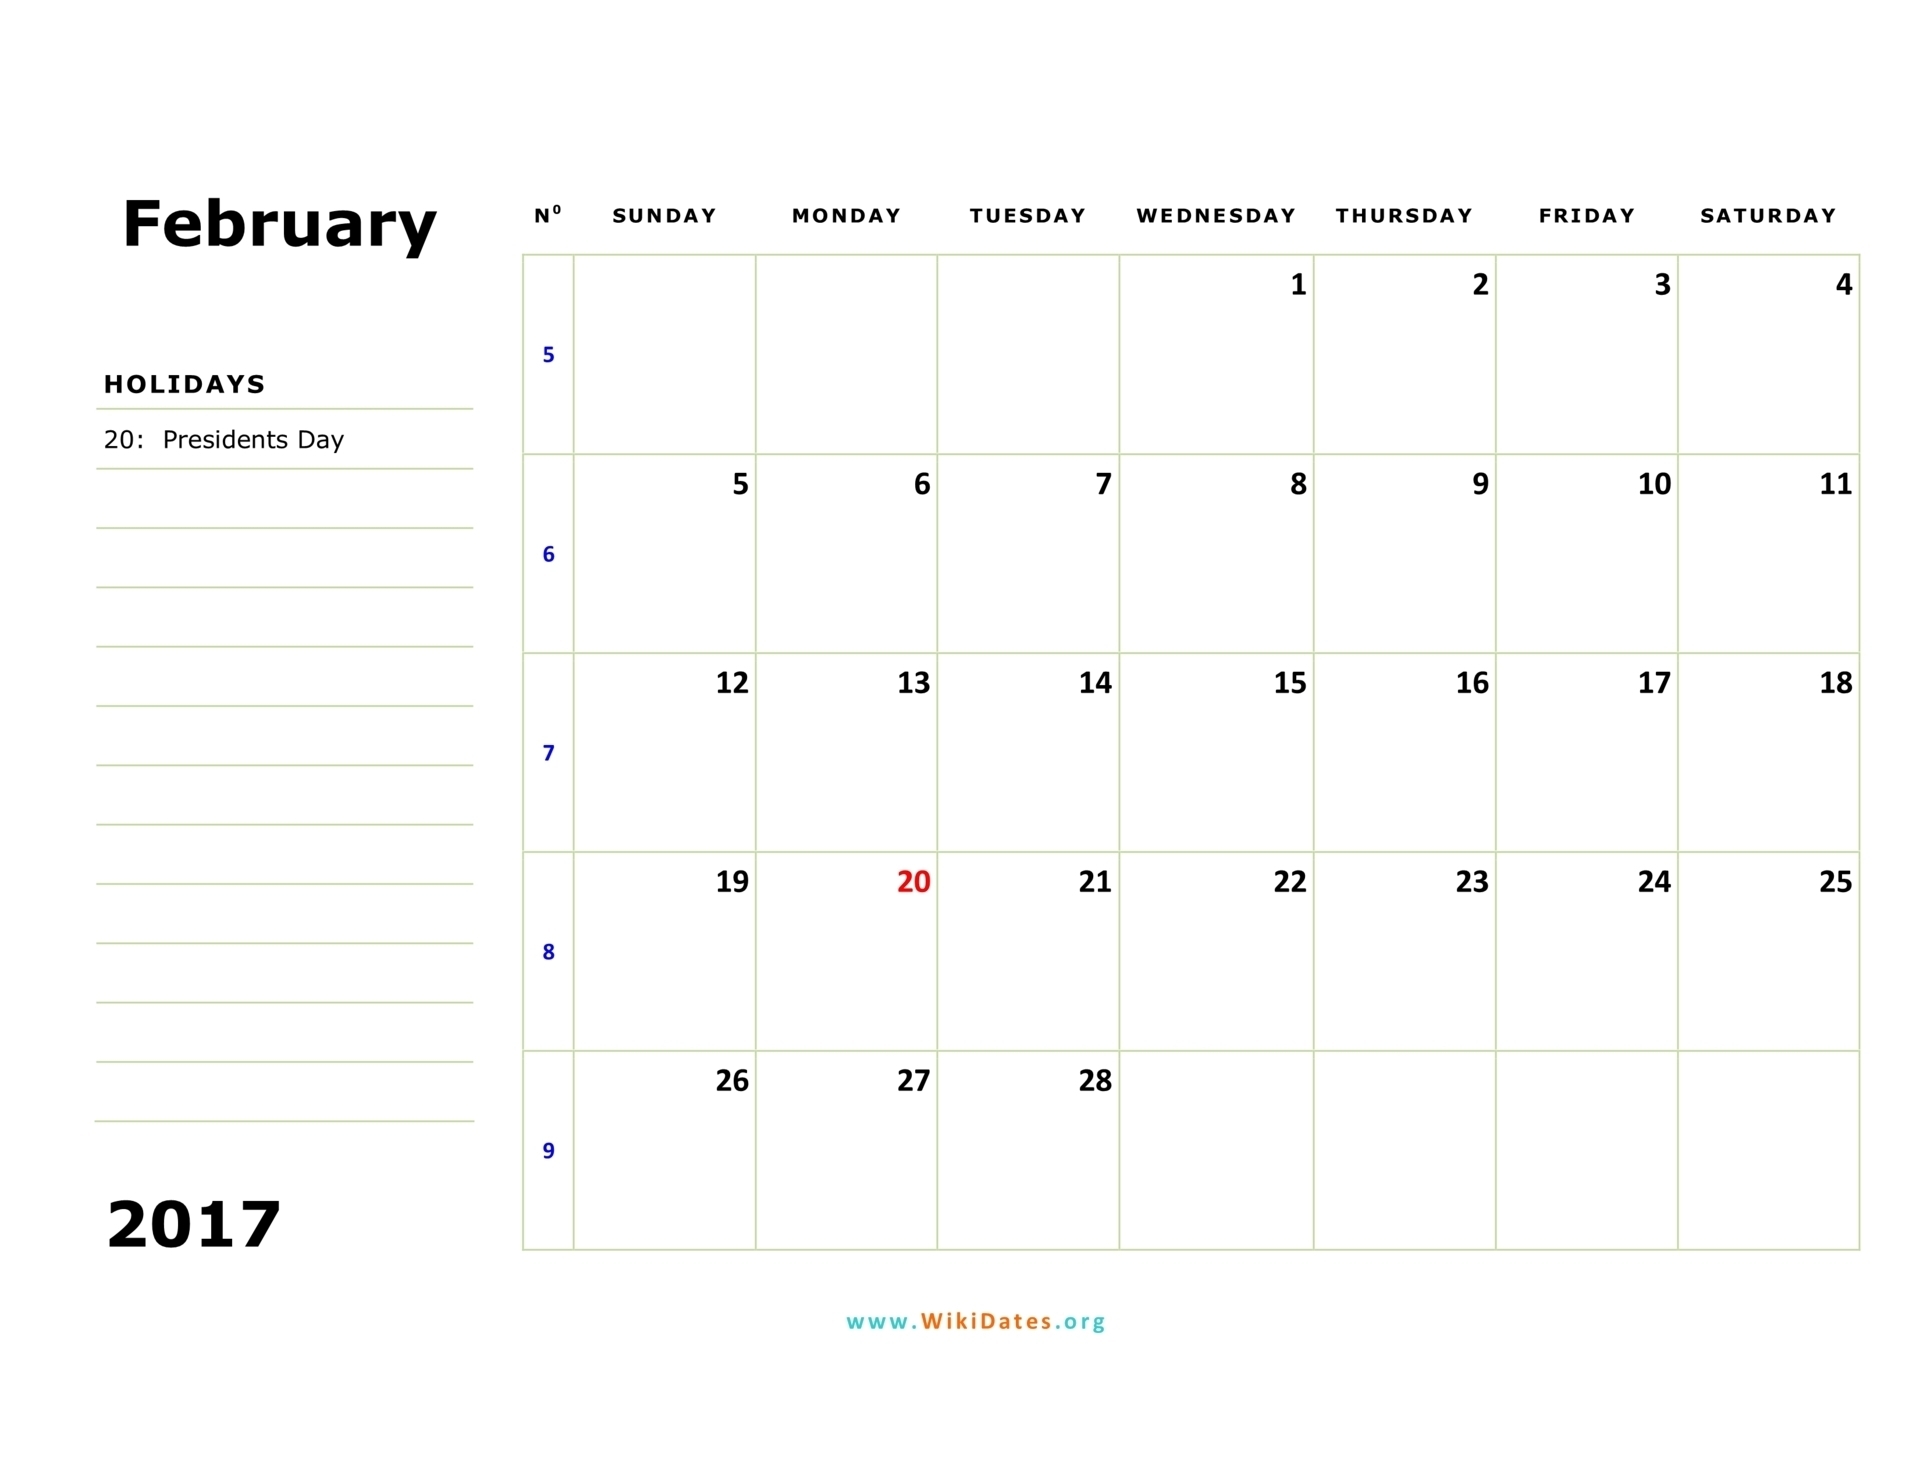 February 2017 Calendar | Wikidates